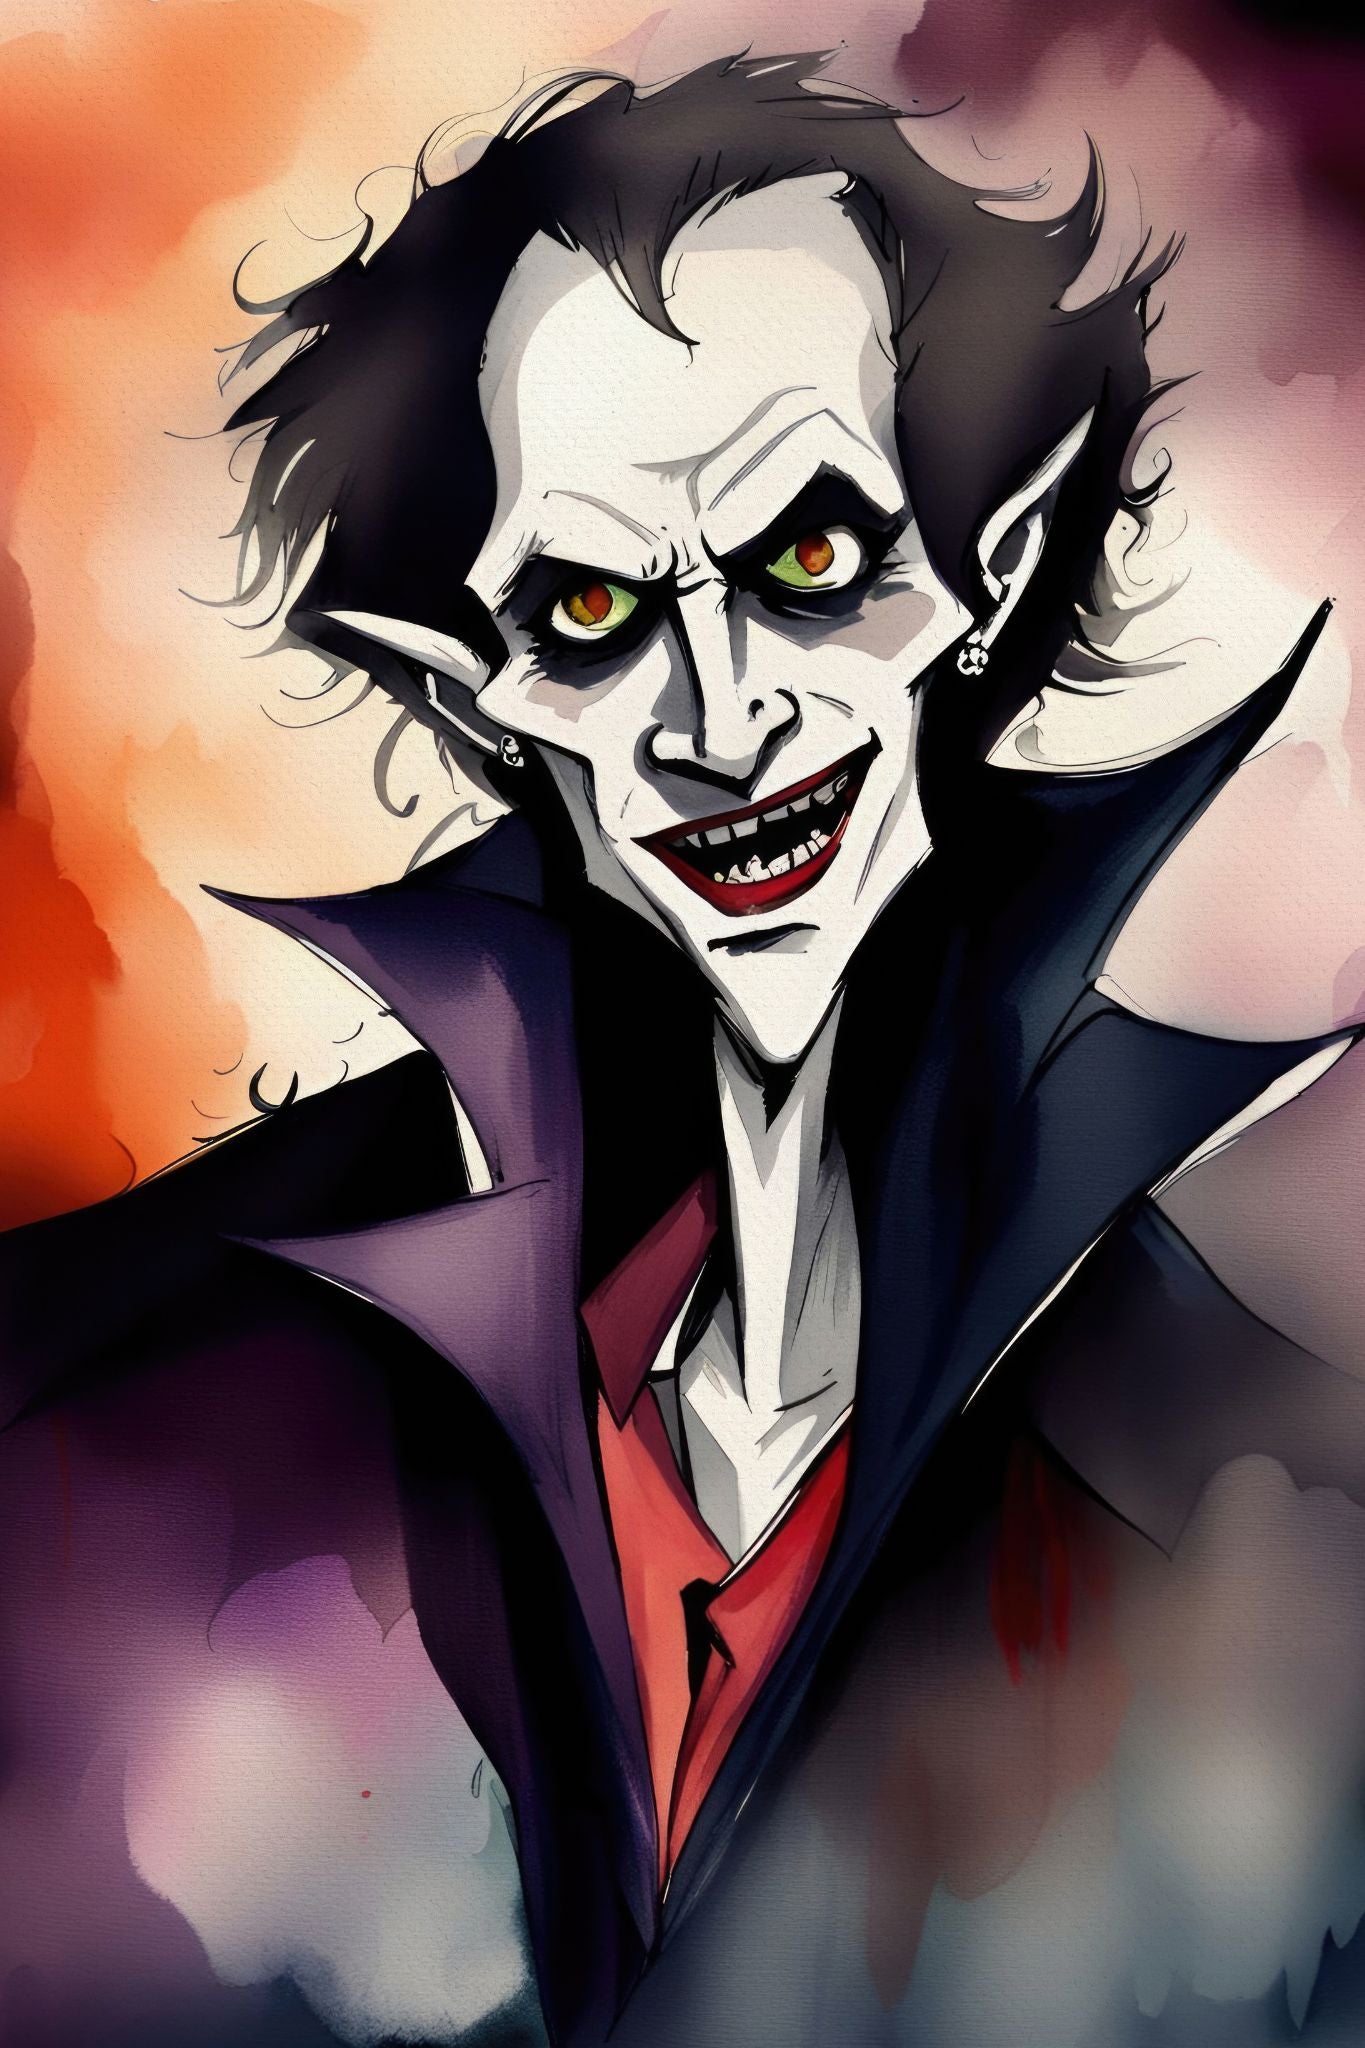 Creepy og kult halloweenkort. Motiv er i cartoon og forestiller en vampyr.